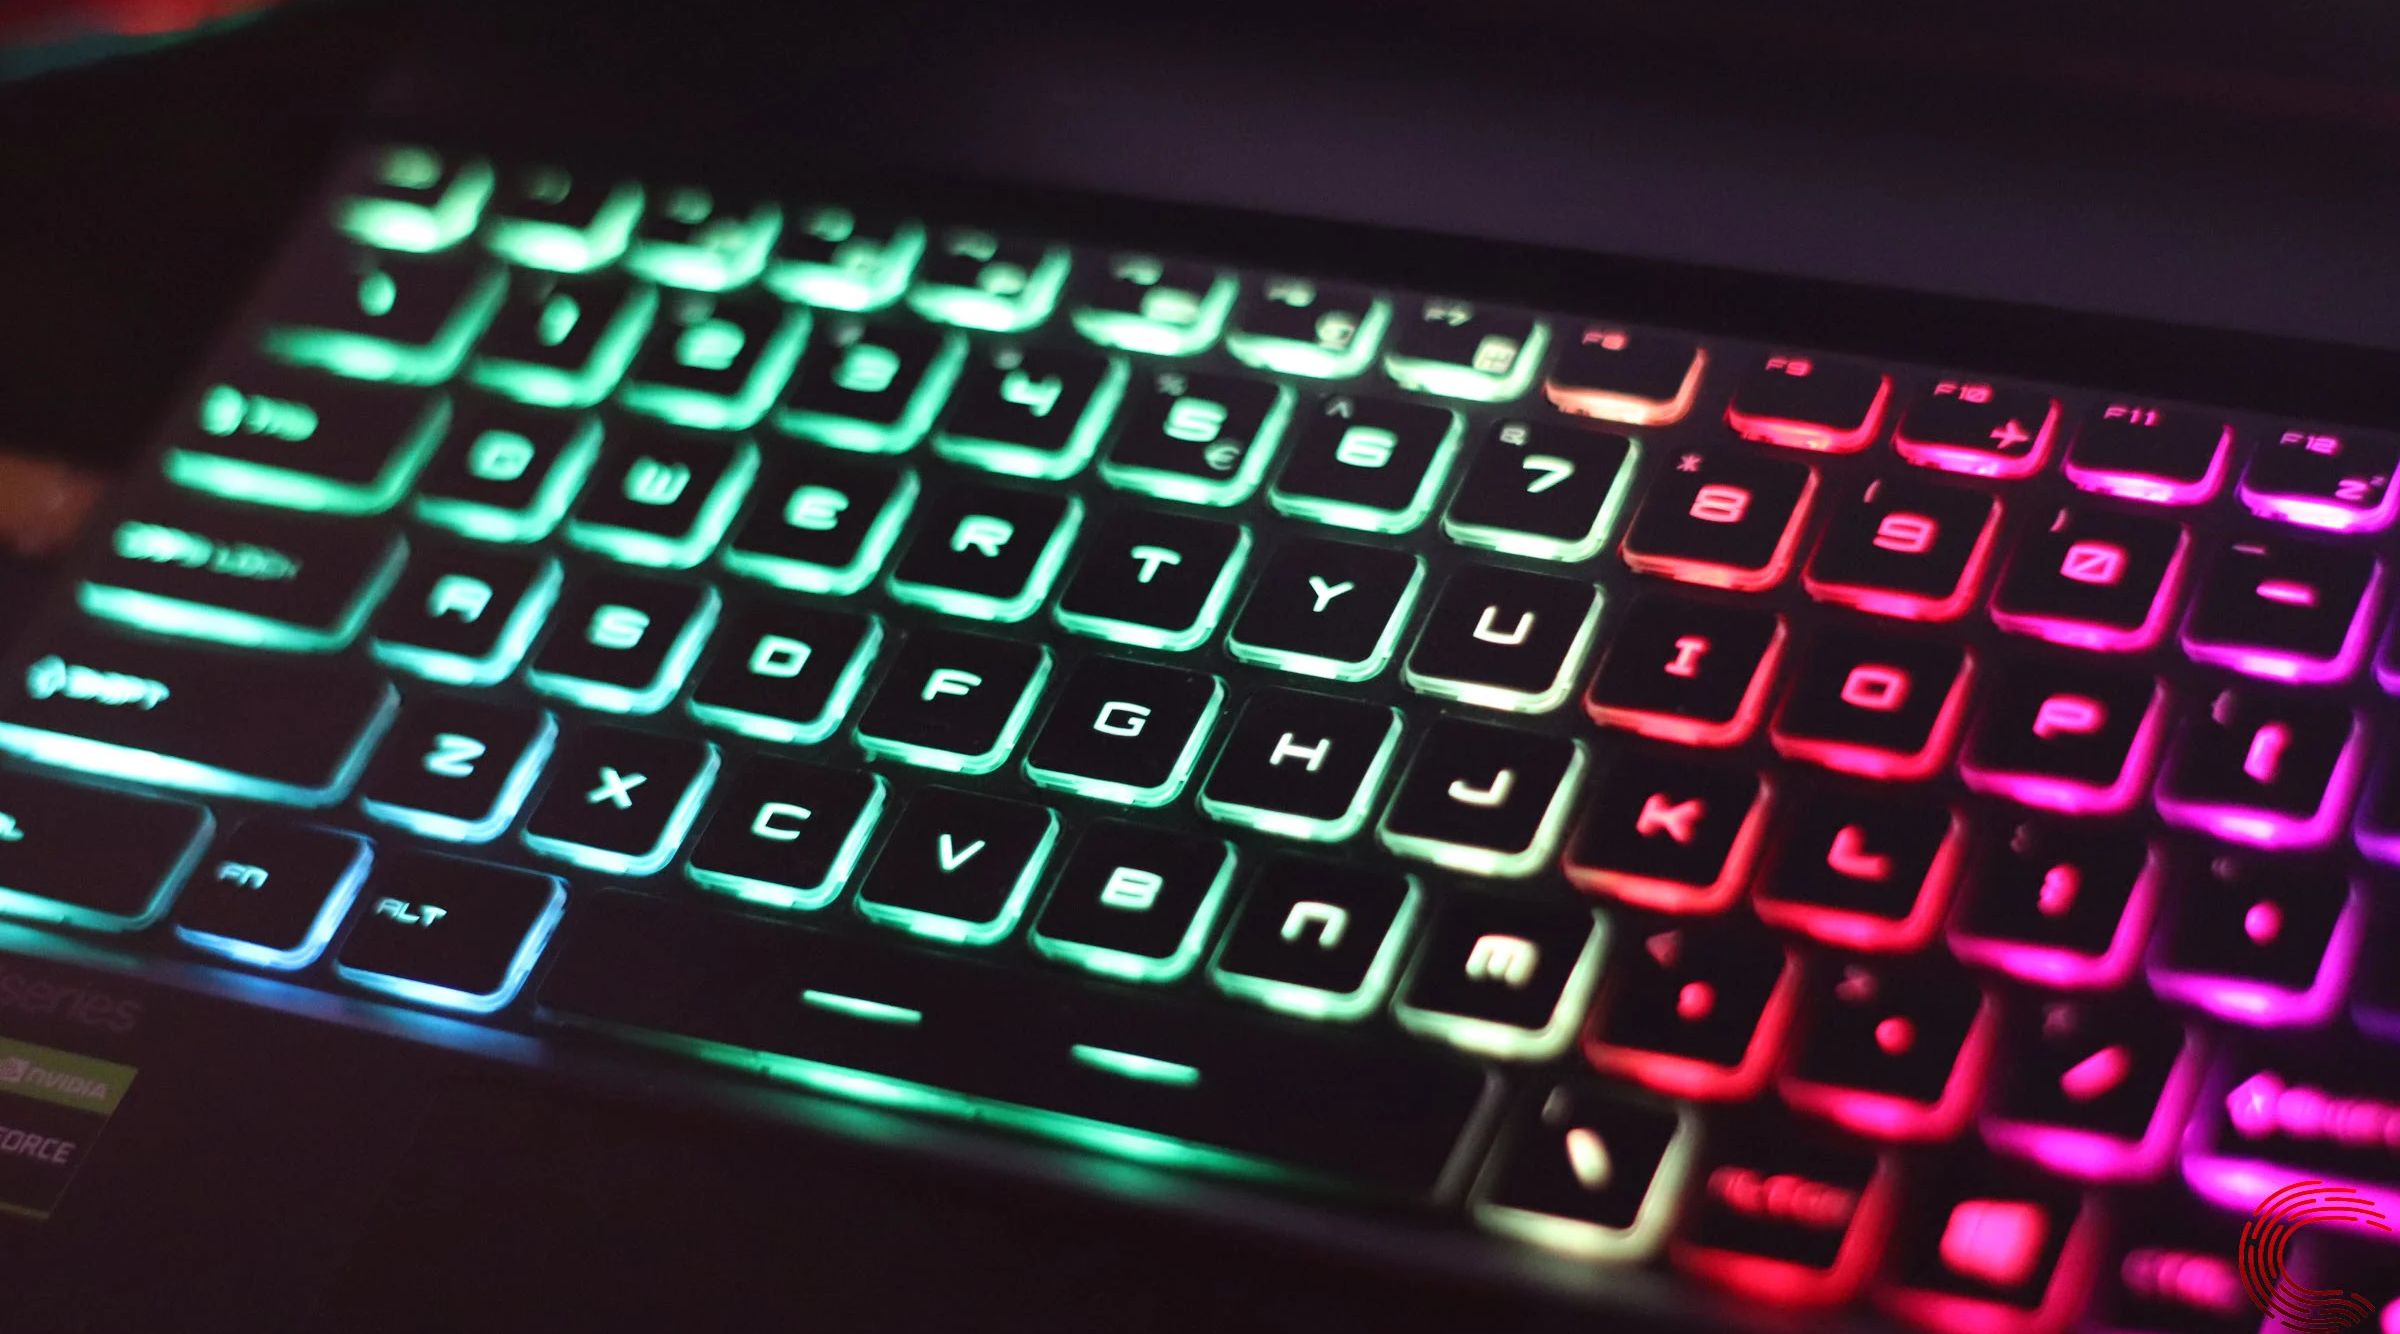 How To Turn Off MSI Gaming Laptop Keyboard Light